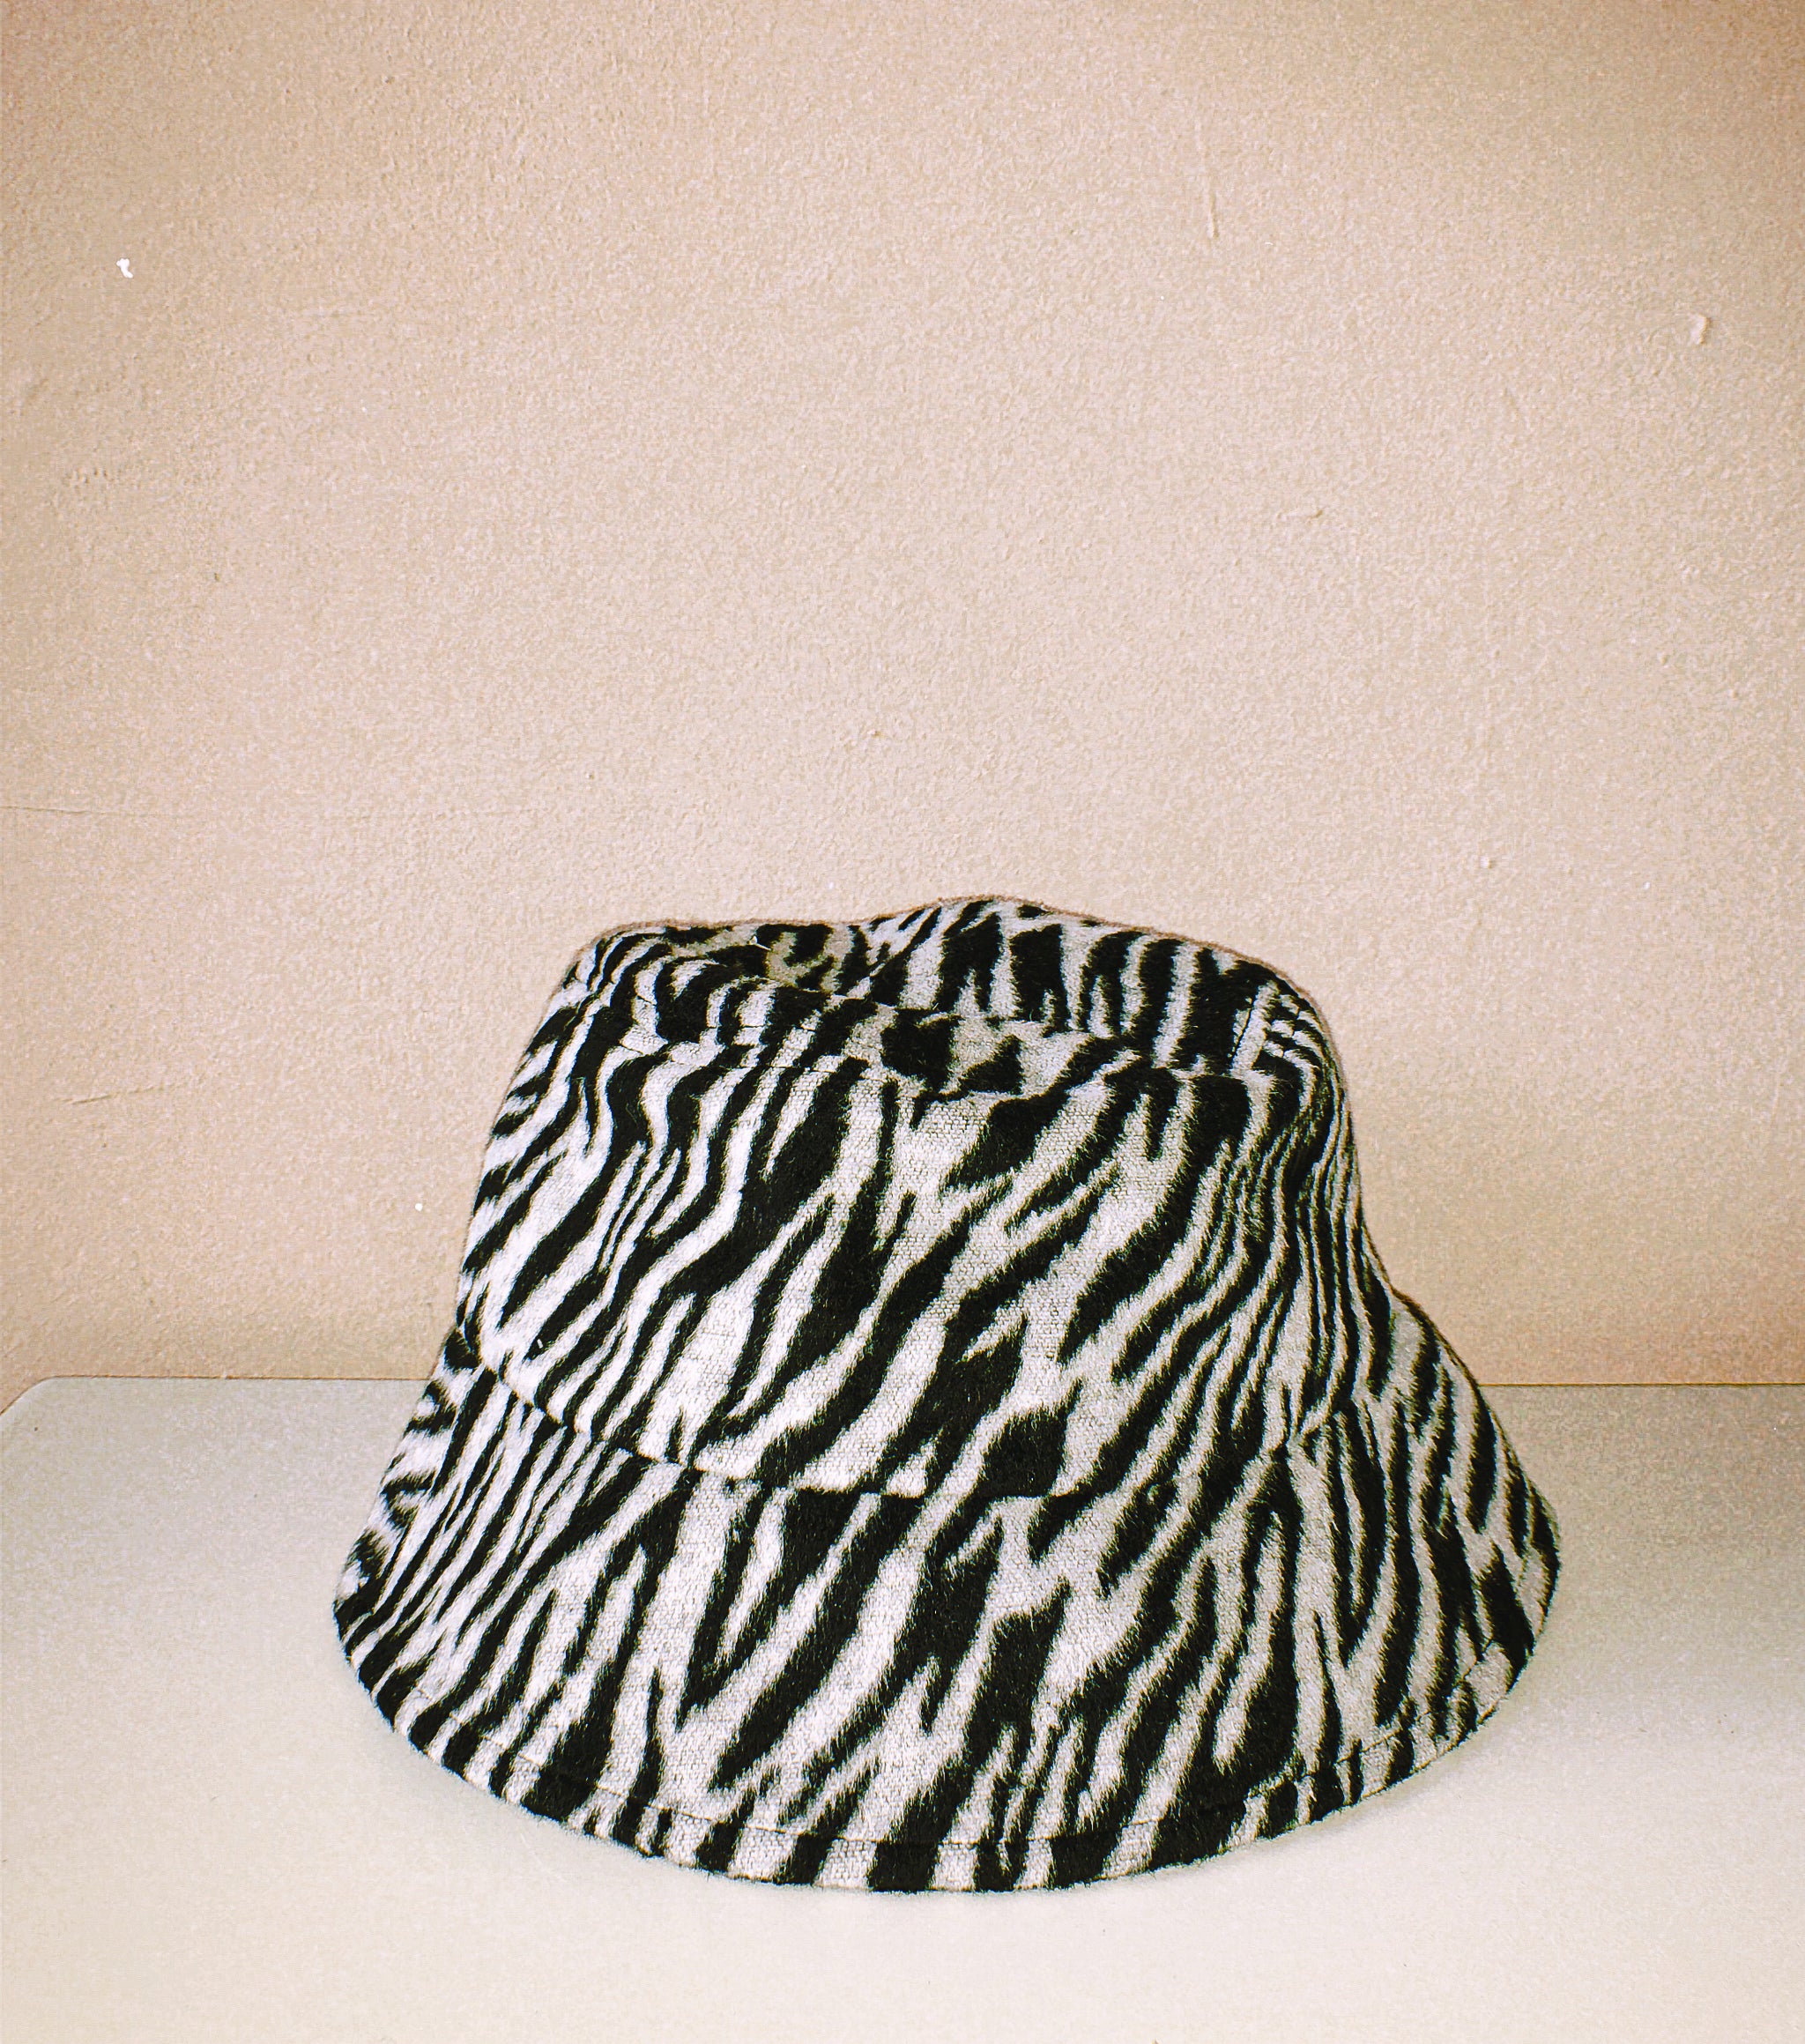 The Zebra Bucket Hat by Veronique